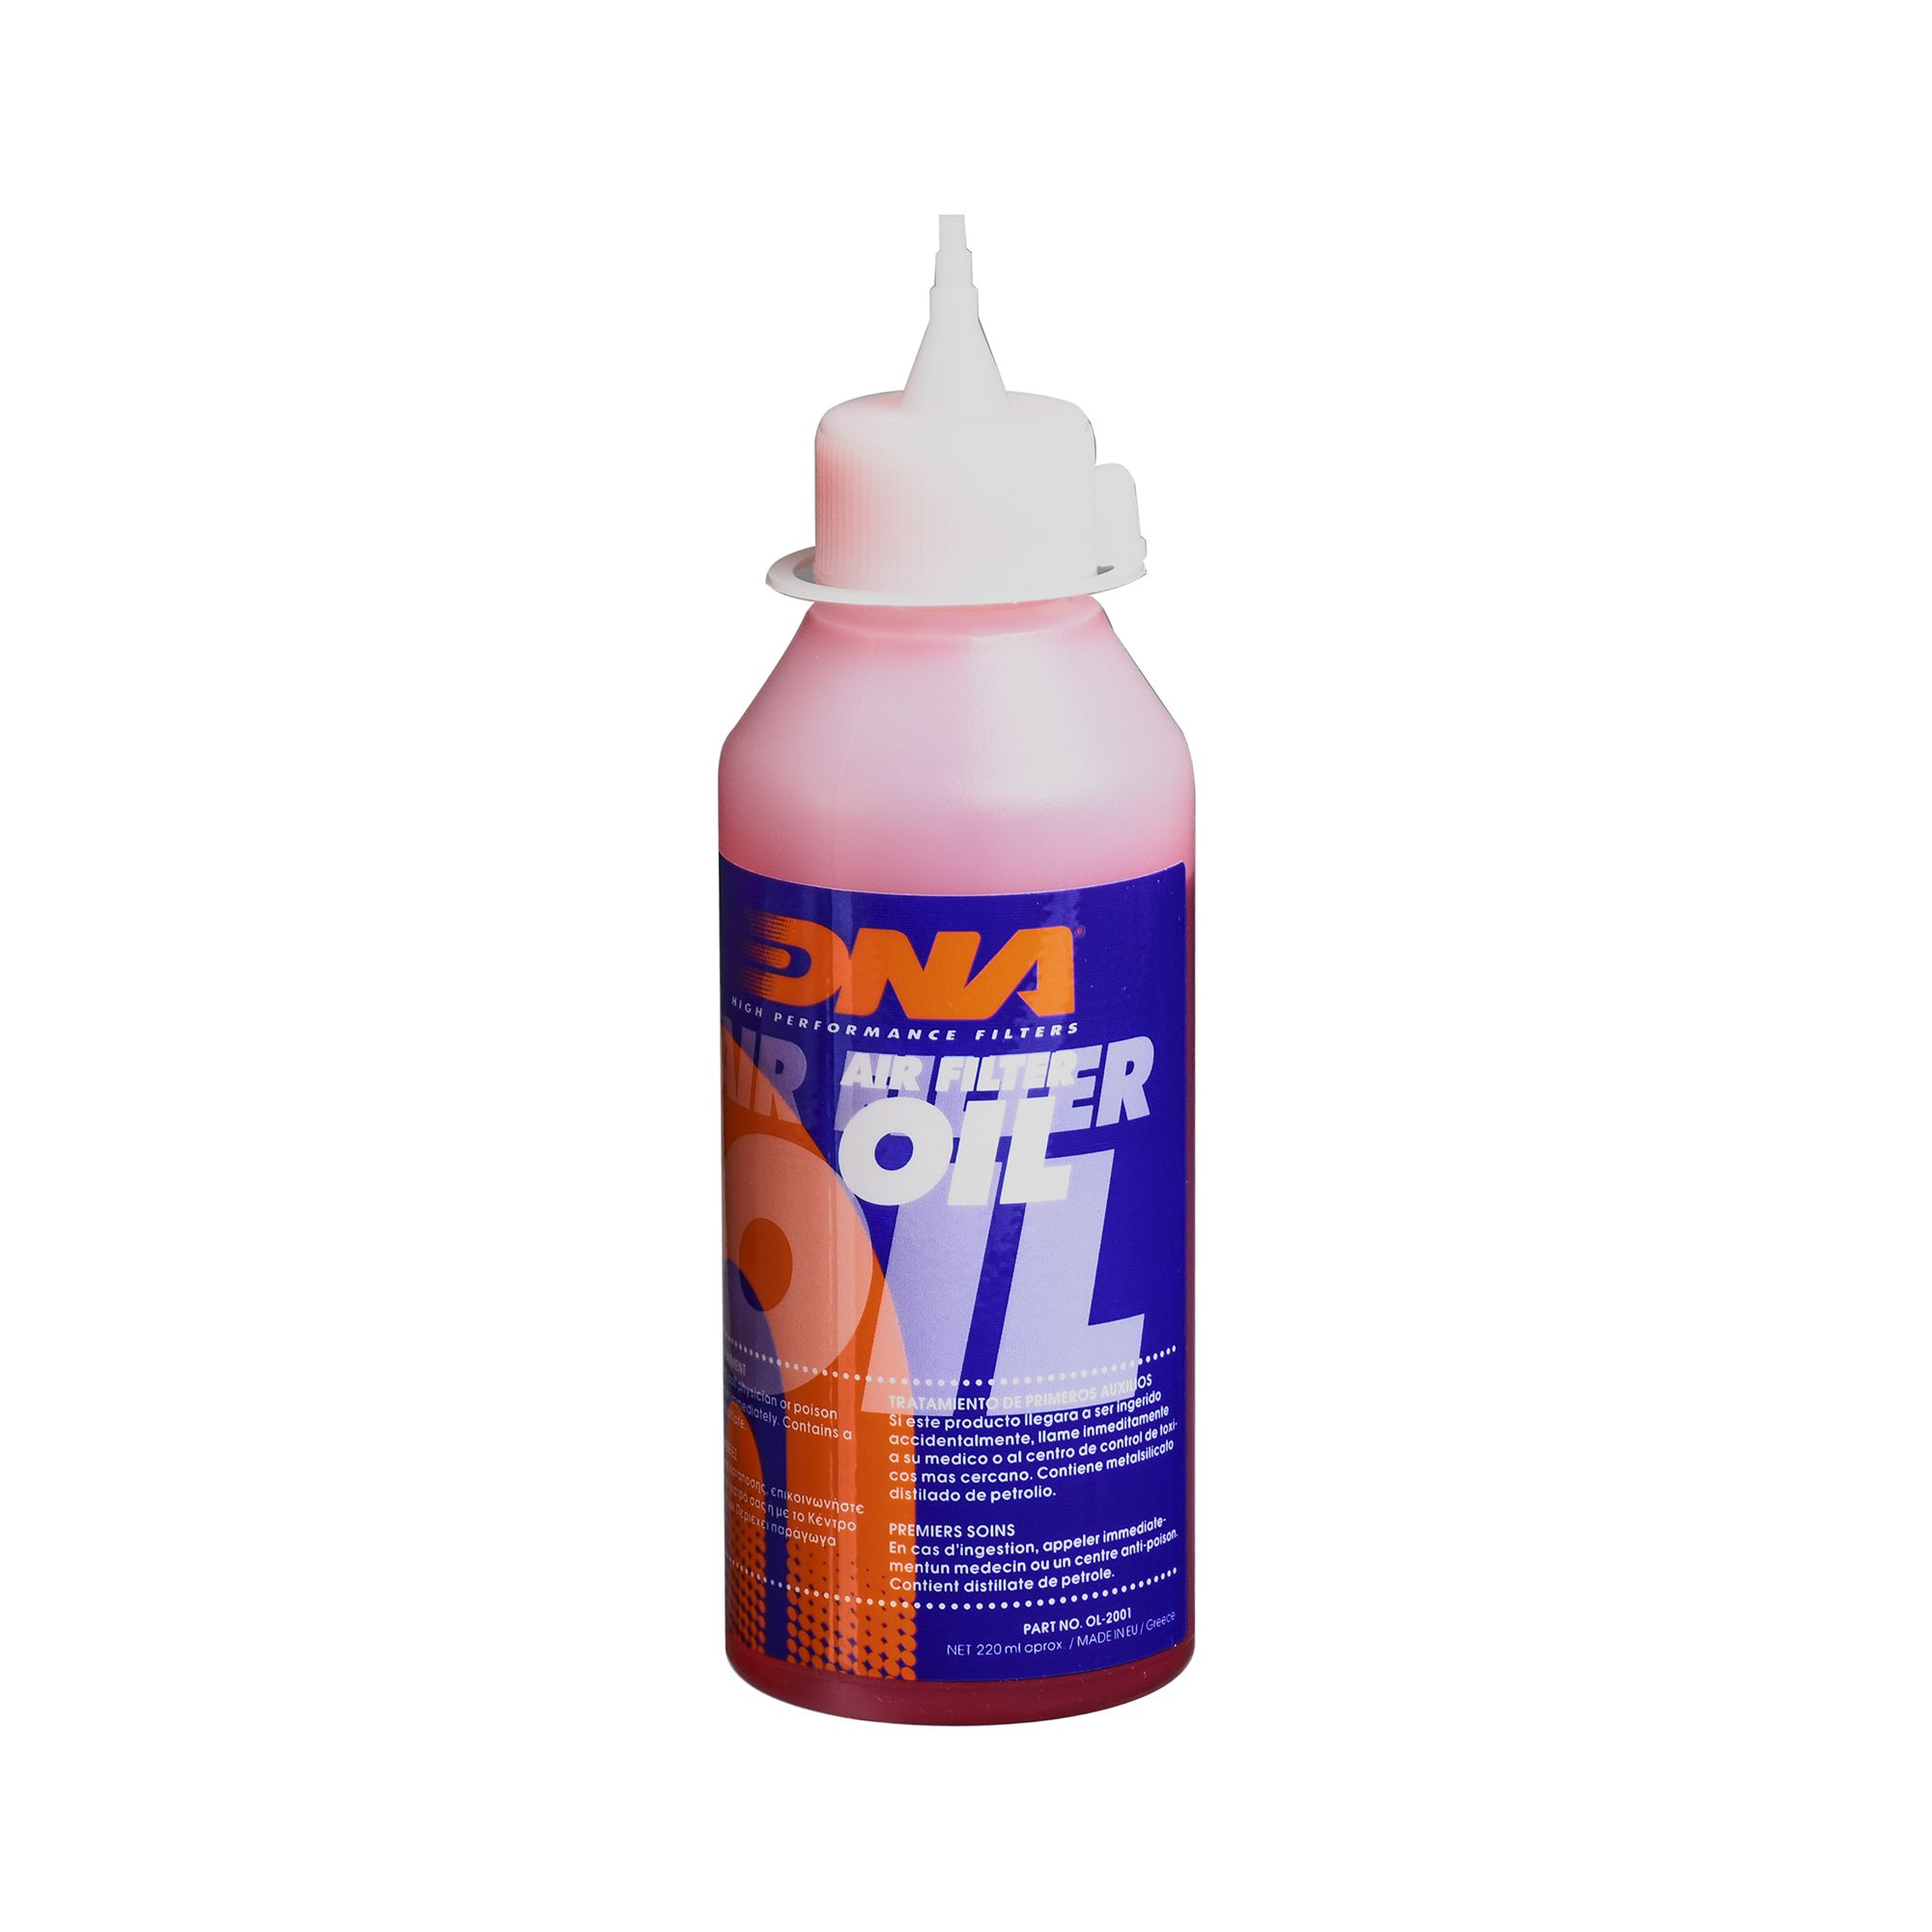 DNA Luftfilter Reiniger 270ml + DNA Sport Luftfilter Öl 220ml Set